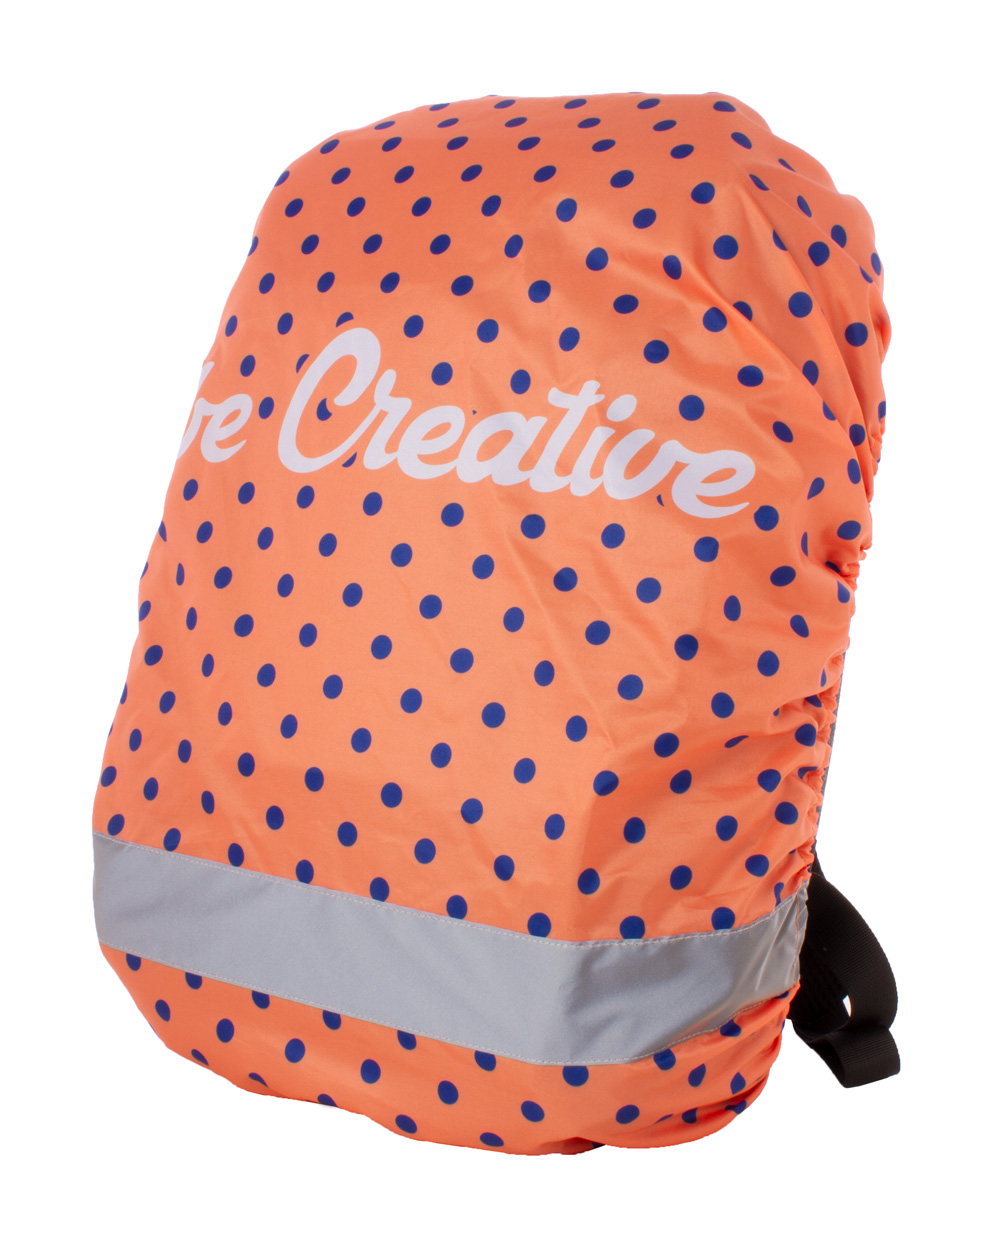 Promo  CreaBack Reflect custom reflective backpack cover